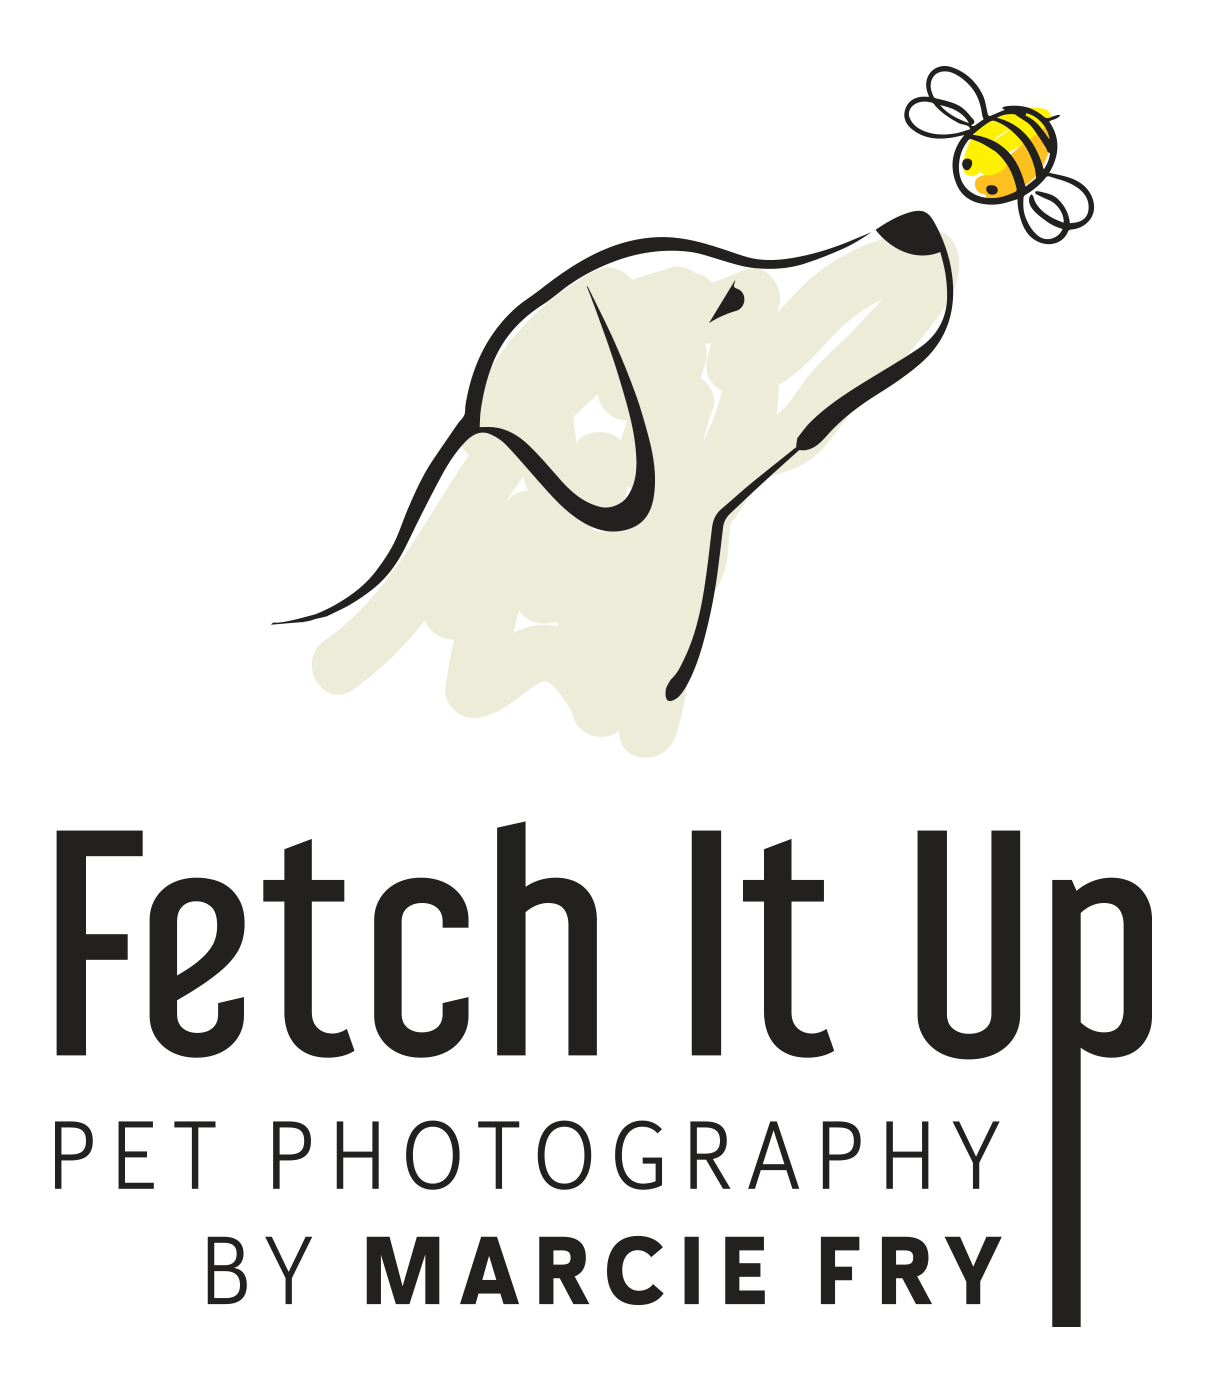 Fetch It Up Pet Photography About Me